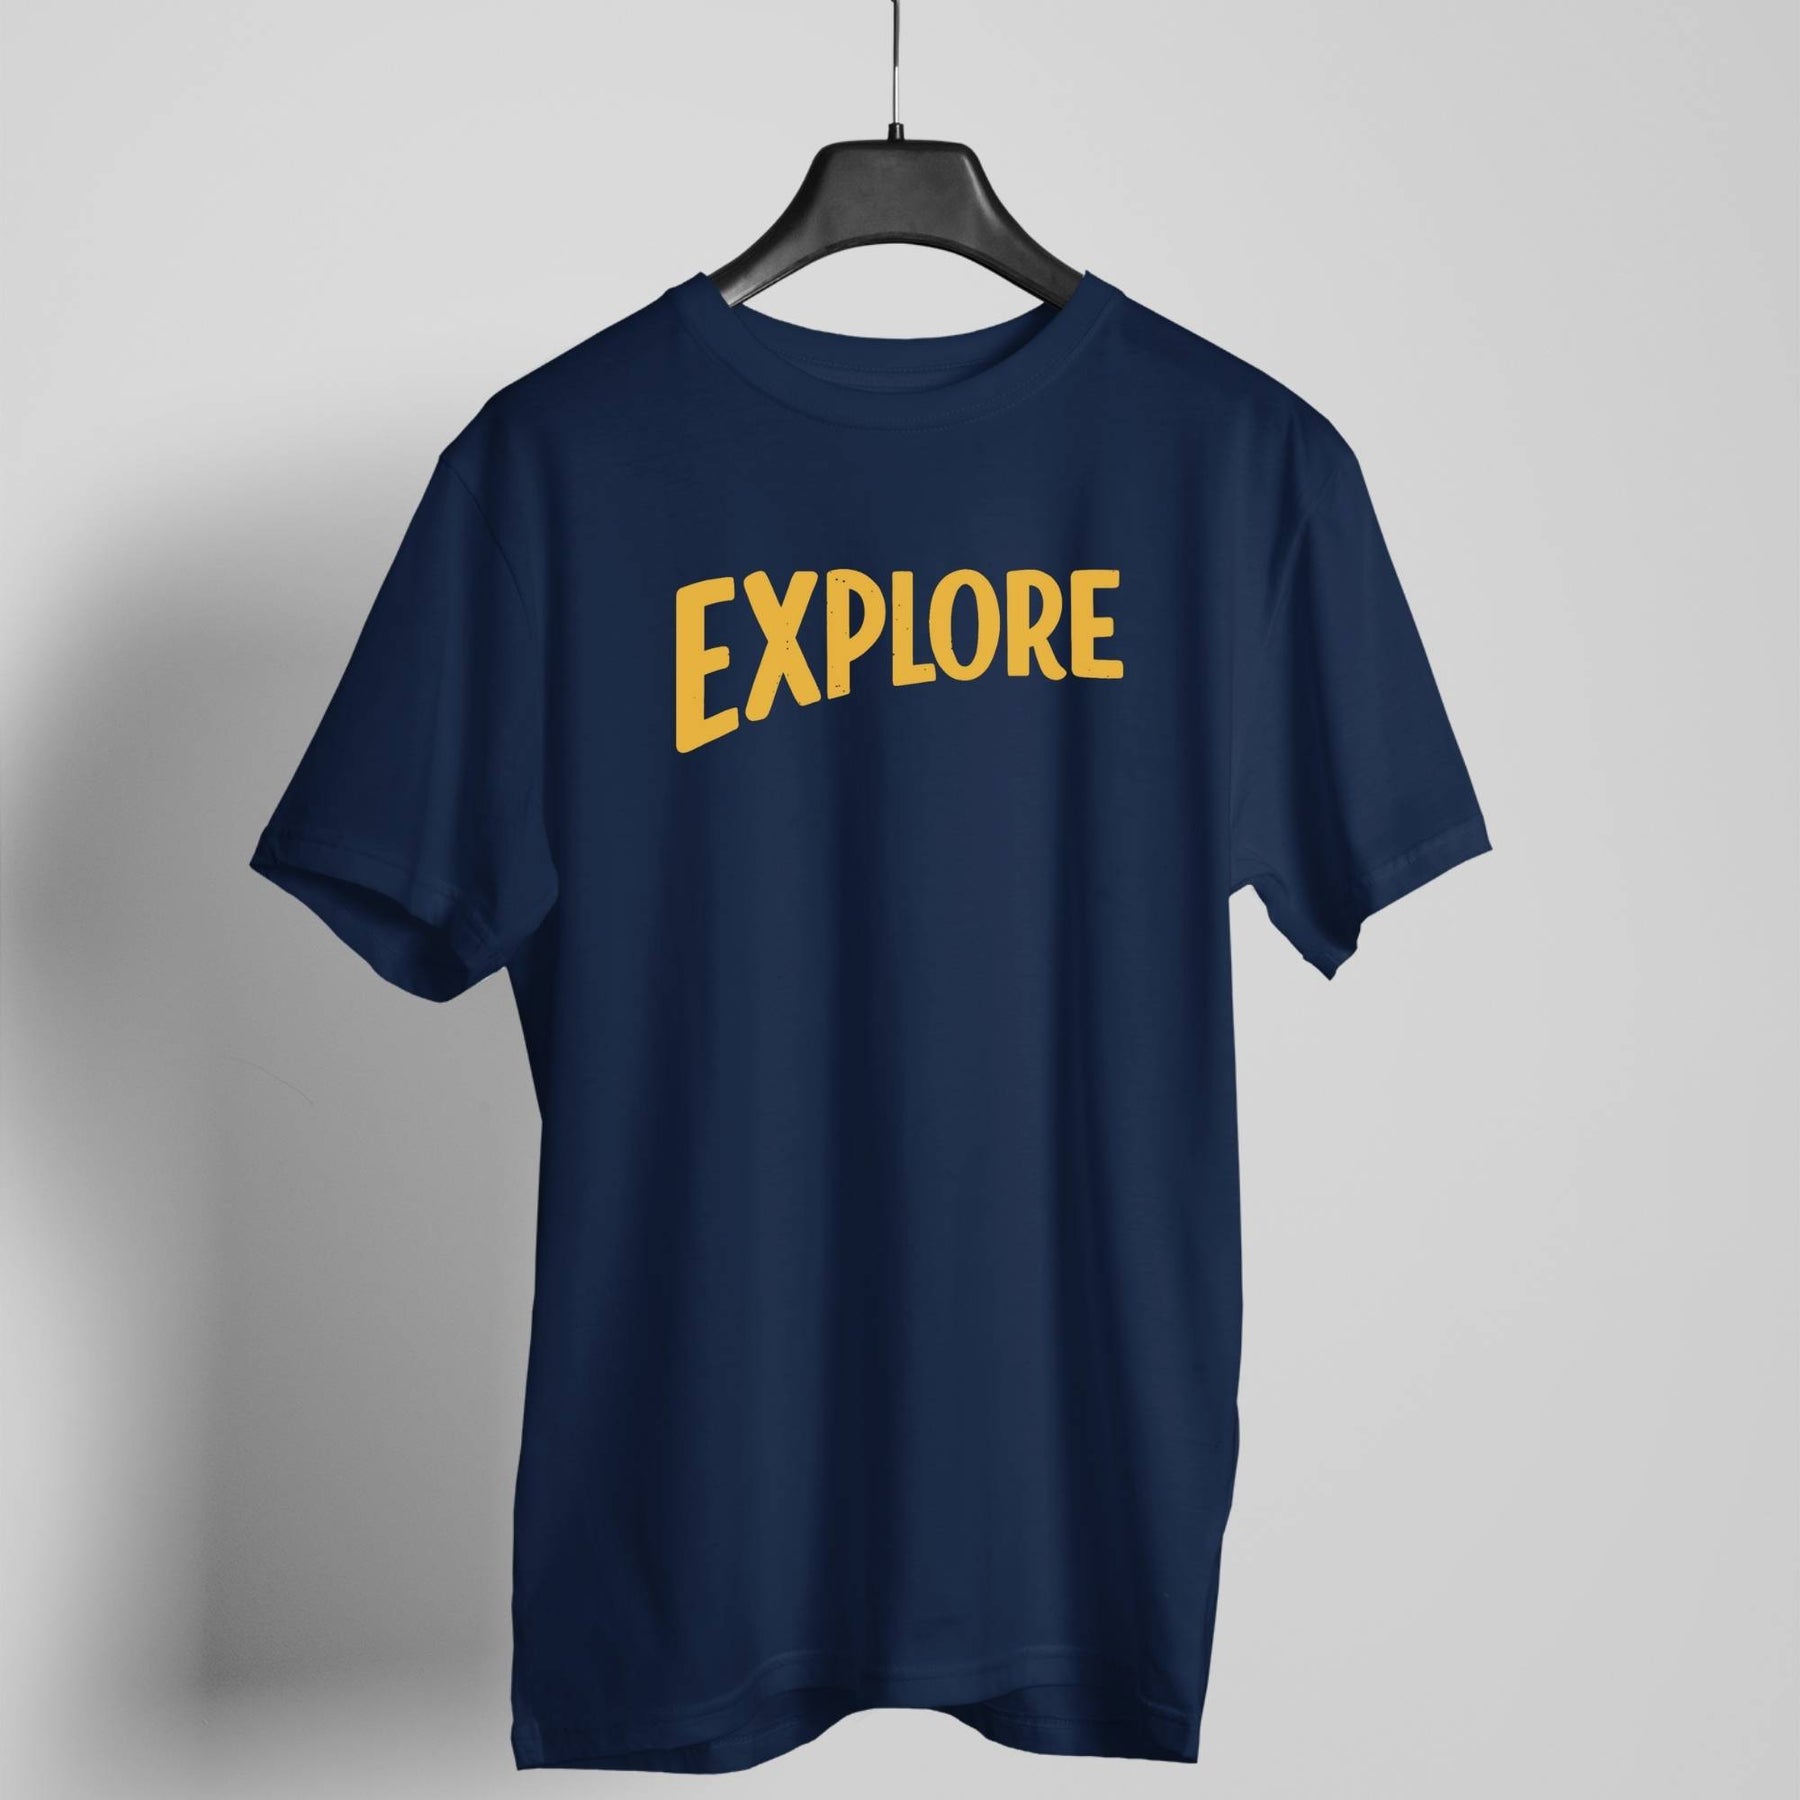 Explore navy blue t-shirt